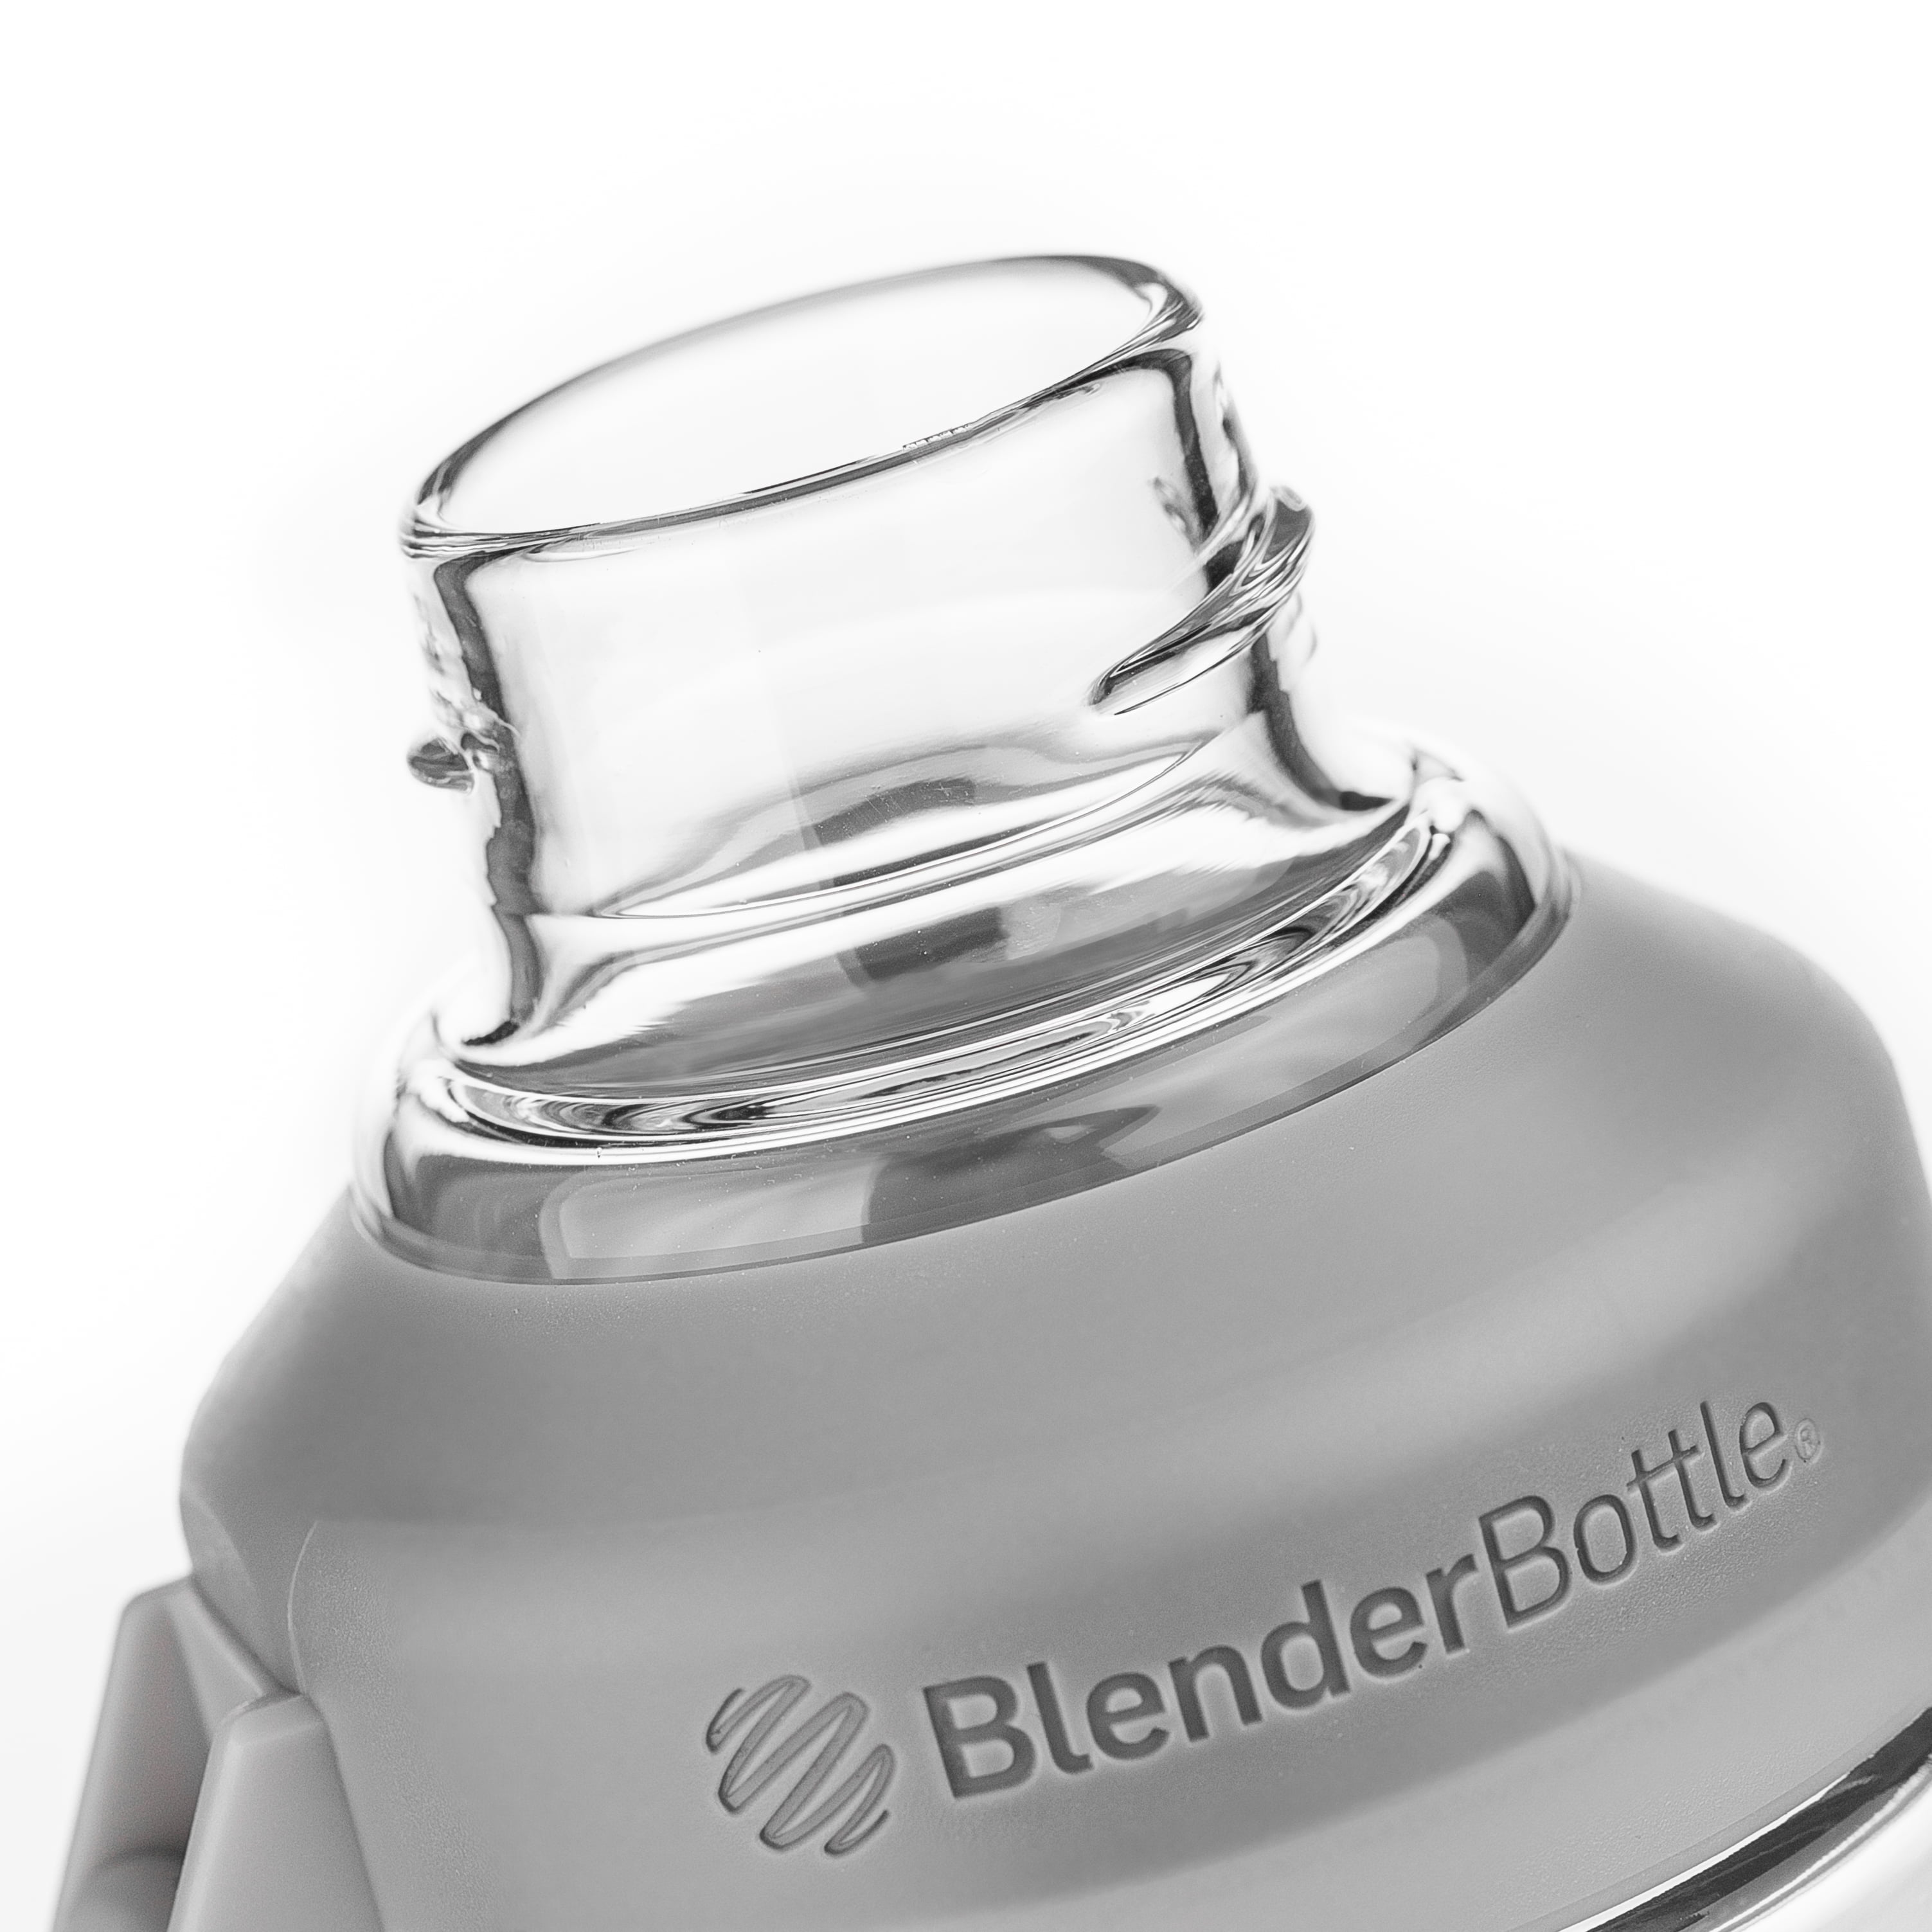 BlenderBottle Mantra 20 oz Glass Shaker Bottle Purple Plum with